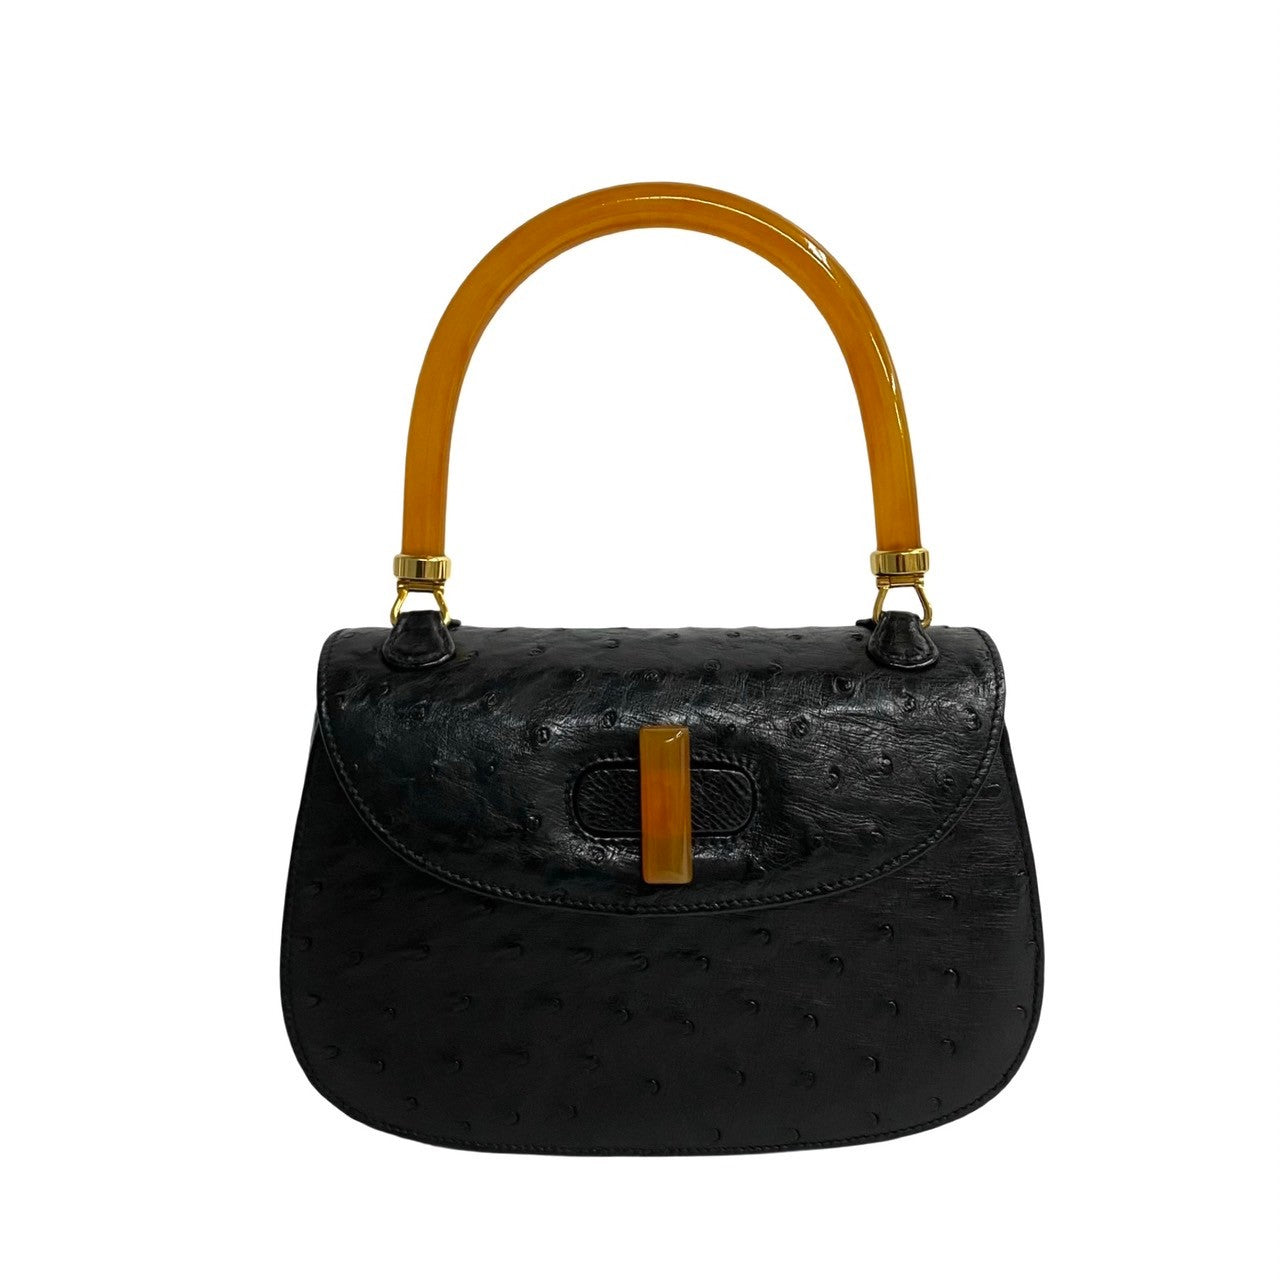 Gucci Old Vintage Leather Mini Handbag Leather Handbag 45798 in Excellent condition